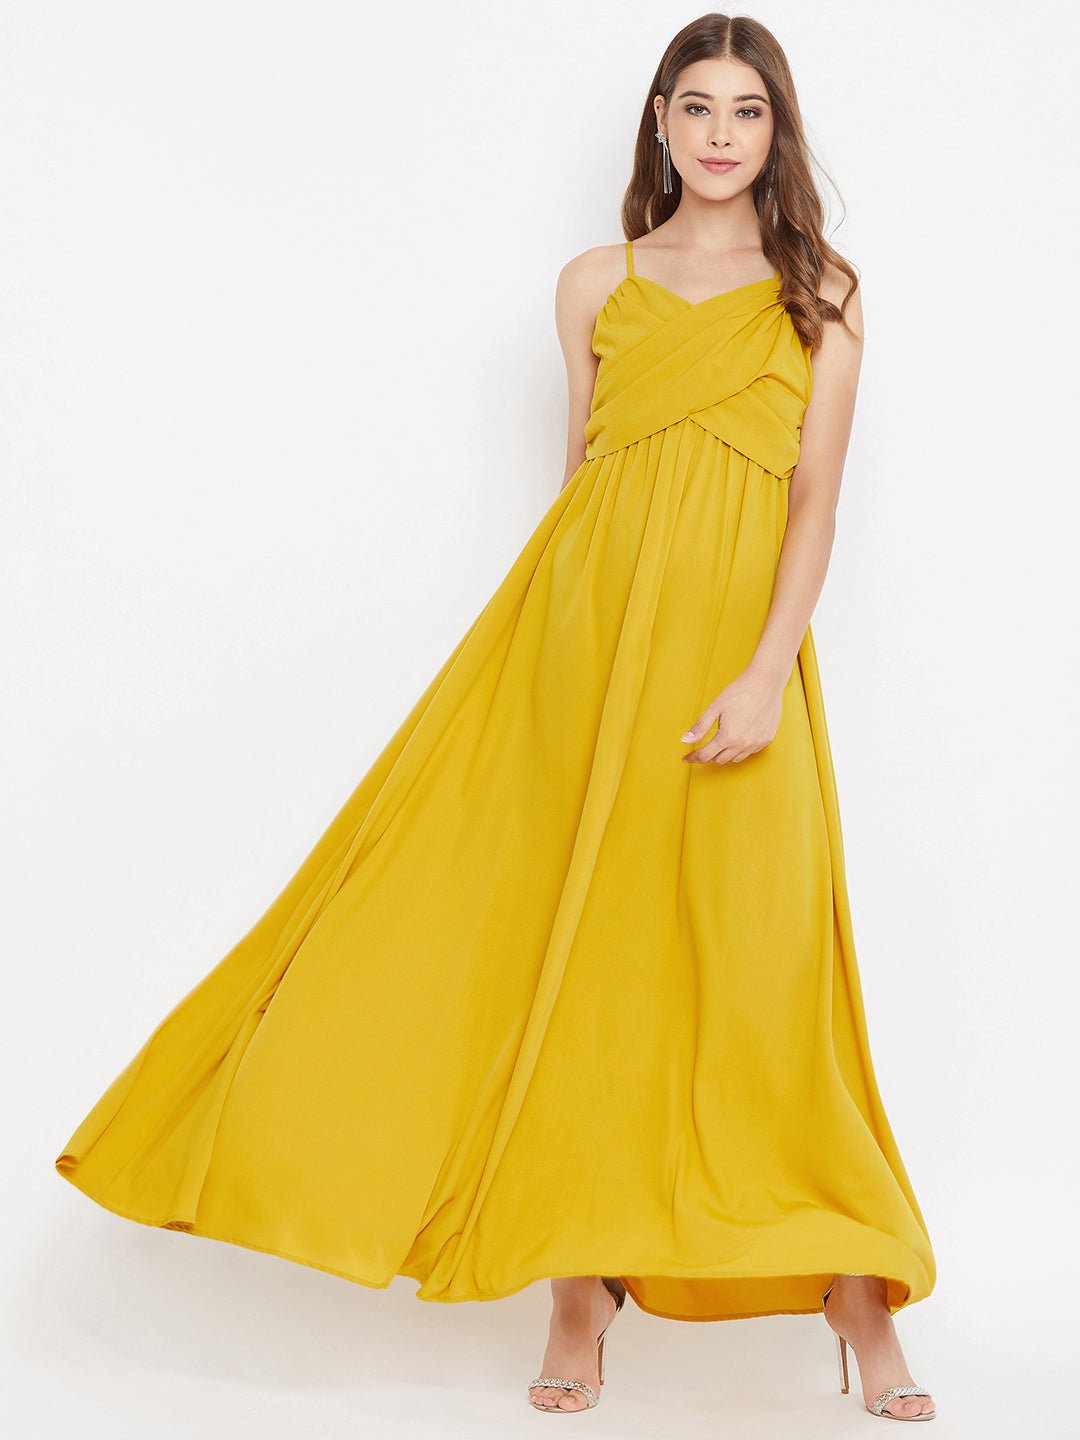 Folk Republic Women Solid Yellow V-Neck Sleeveless Ruched Maxi Dress - #folk republic#